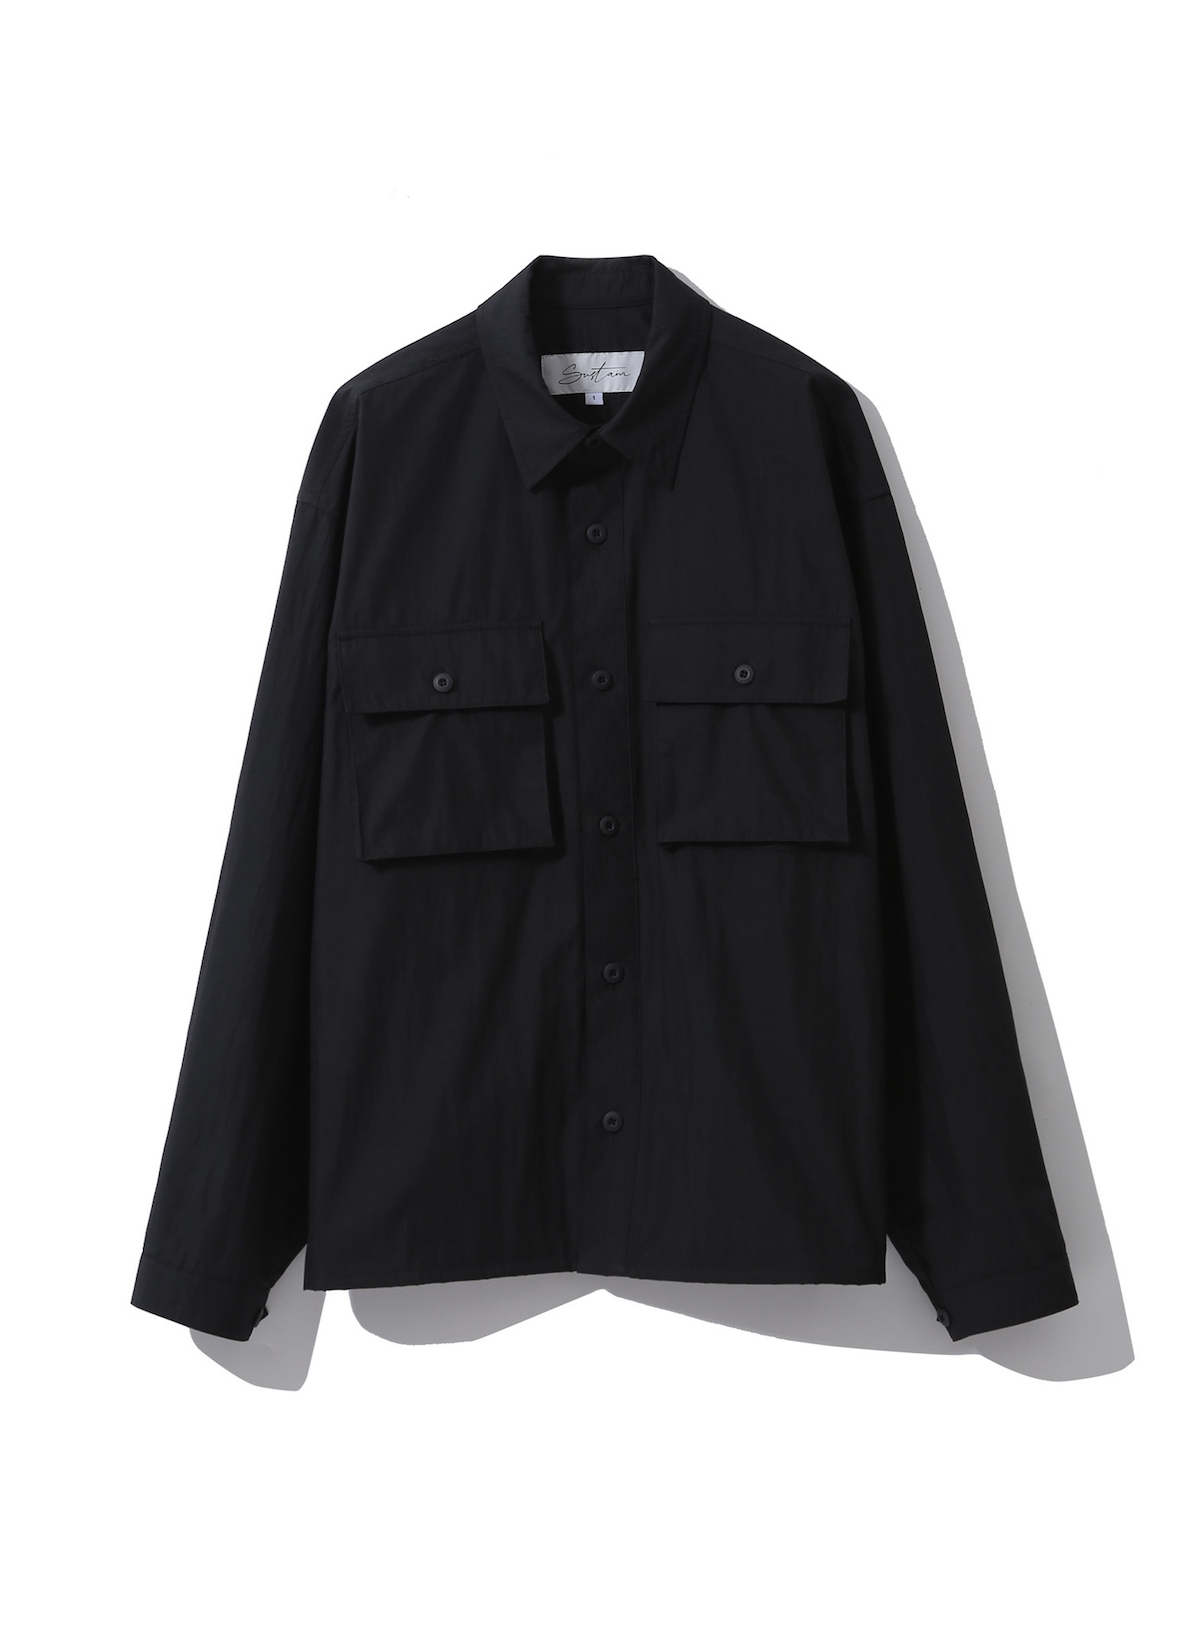 4PK Shirt Jacket Black